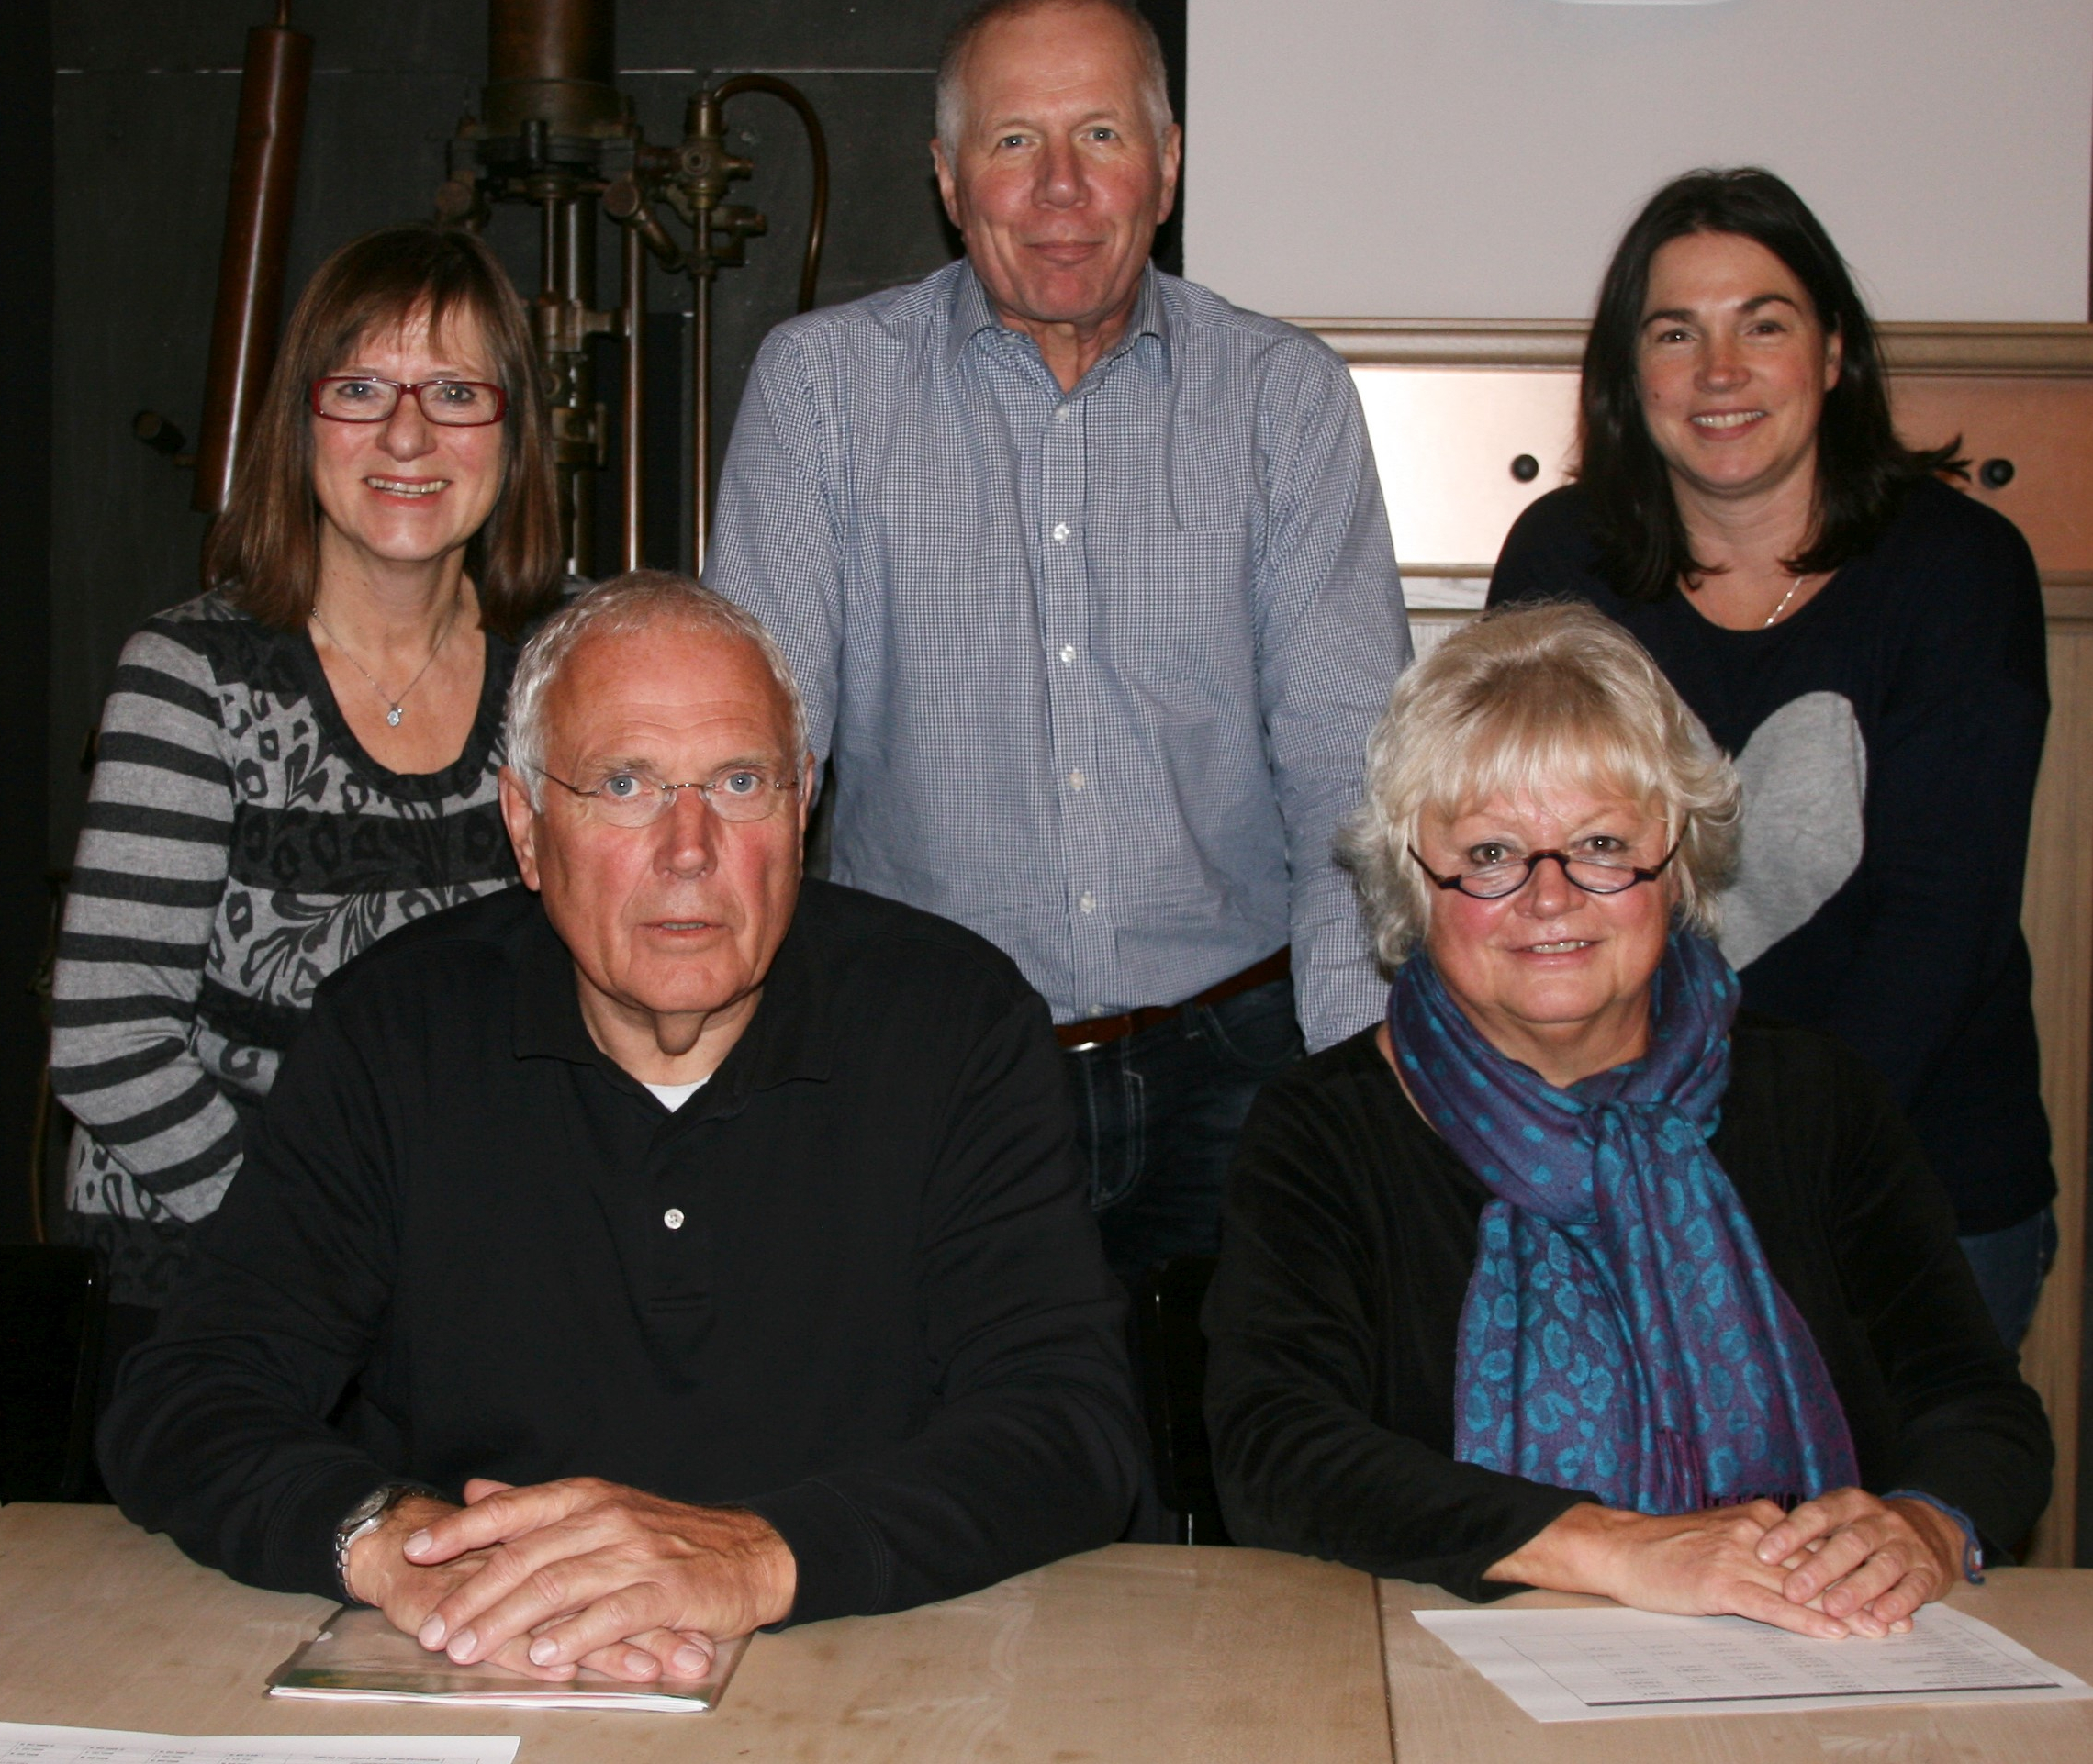 v.l. Vorstand des Ortsverbands Grüne Ratingen am 07.12.2015: Edeltrraud Bell, Thomas Pokladek, Alexander Wirth, Mareike Wingerath, Ute Meier